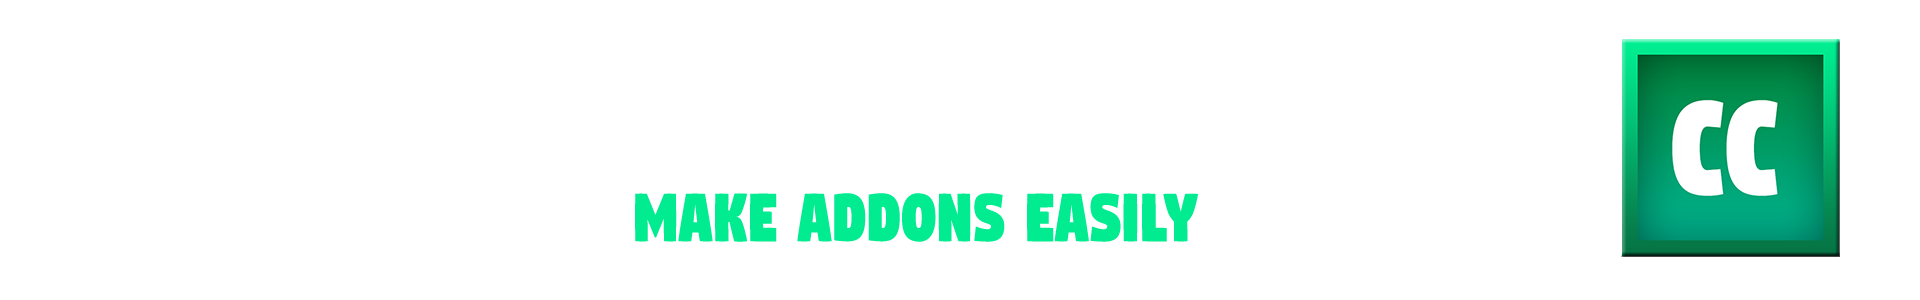 CoreCoder-One